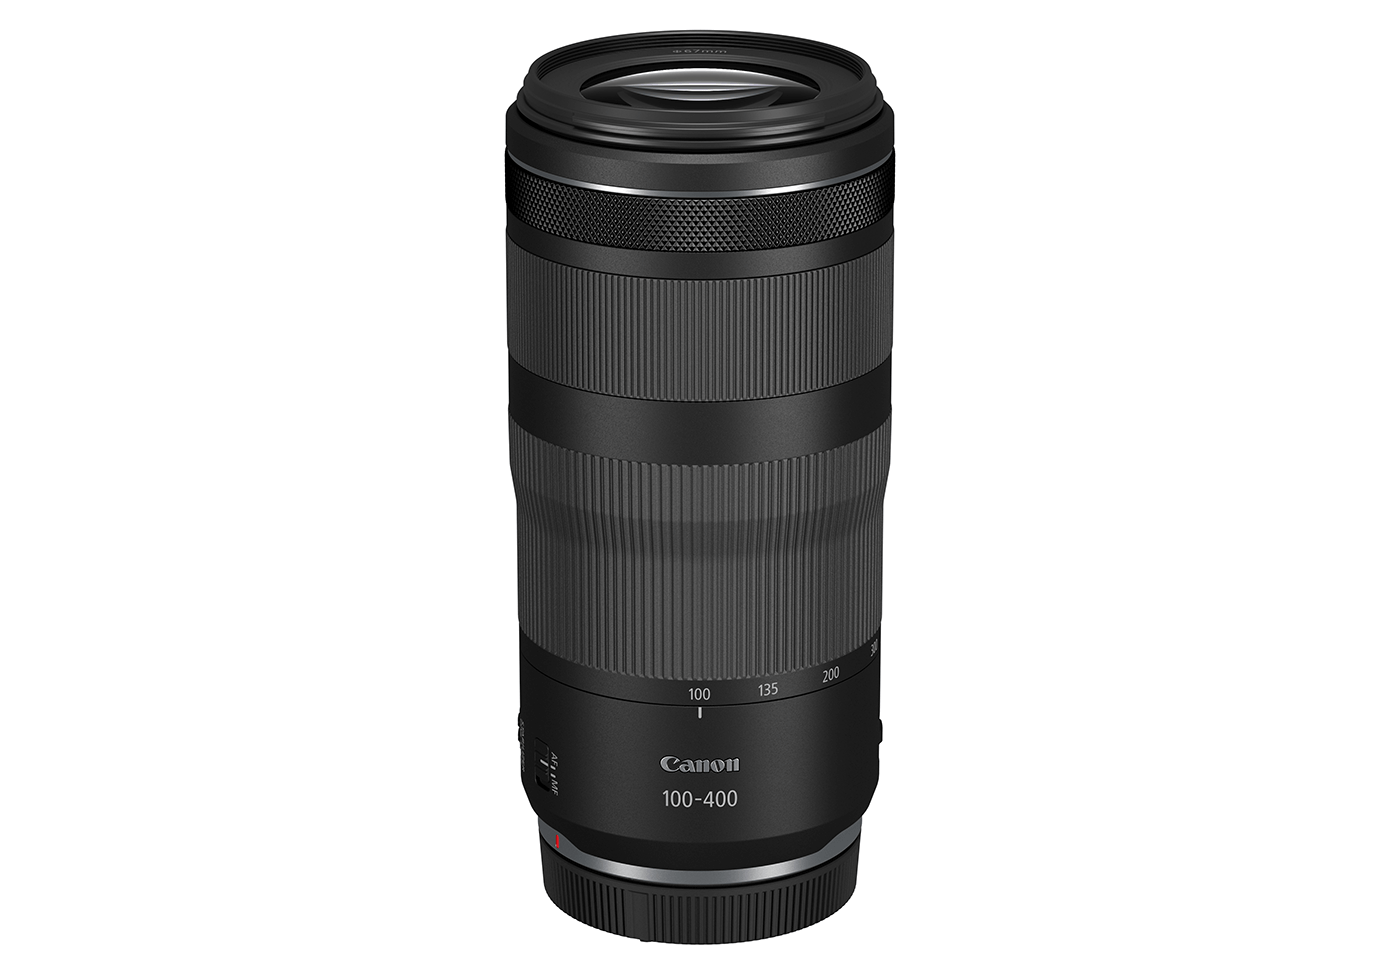 Side profile image of RF 100-400mm F5.6-8 IS USM telephoto lens